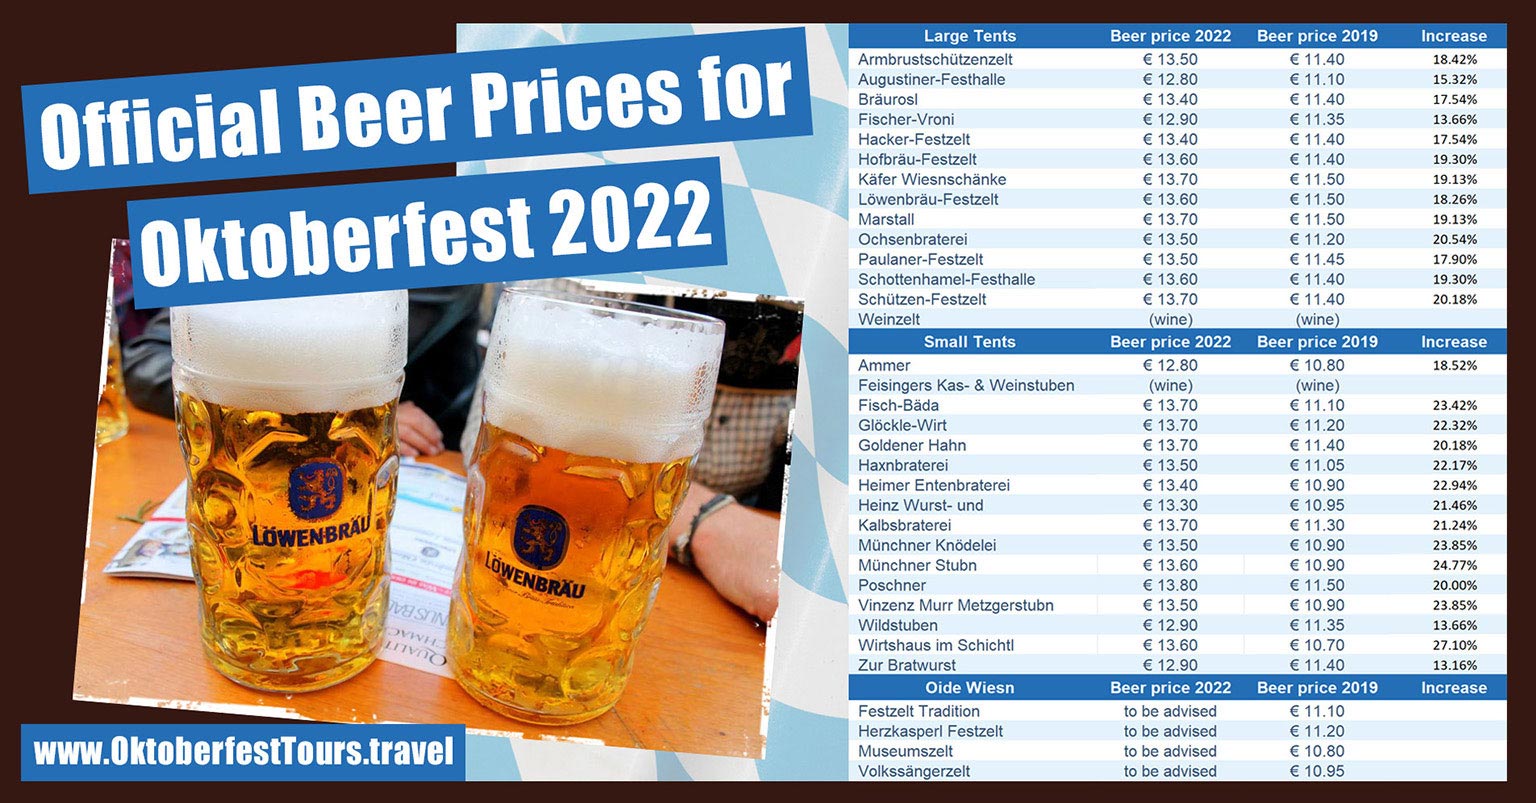 Oktoberfest 2022 Beer Prices